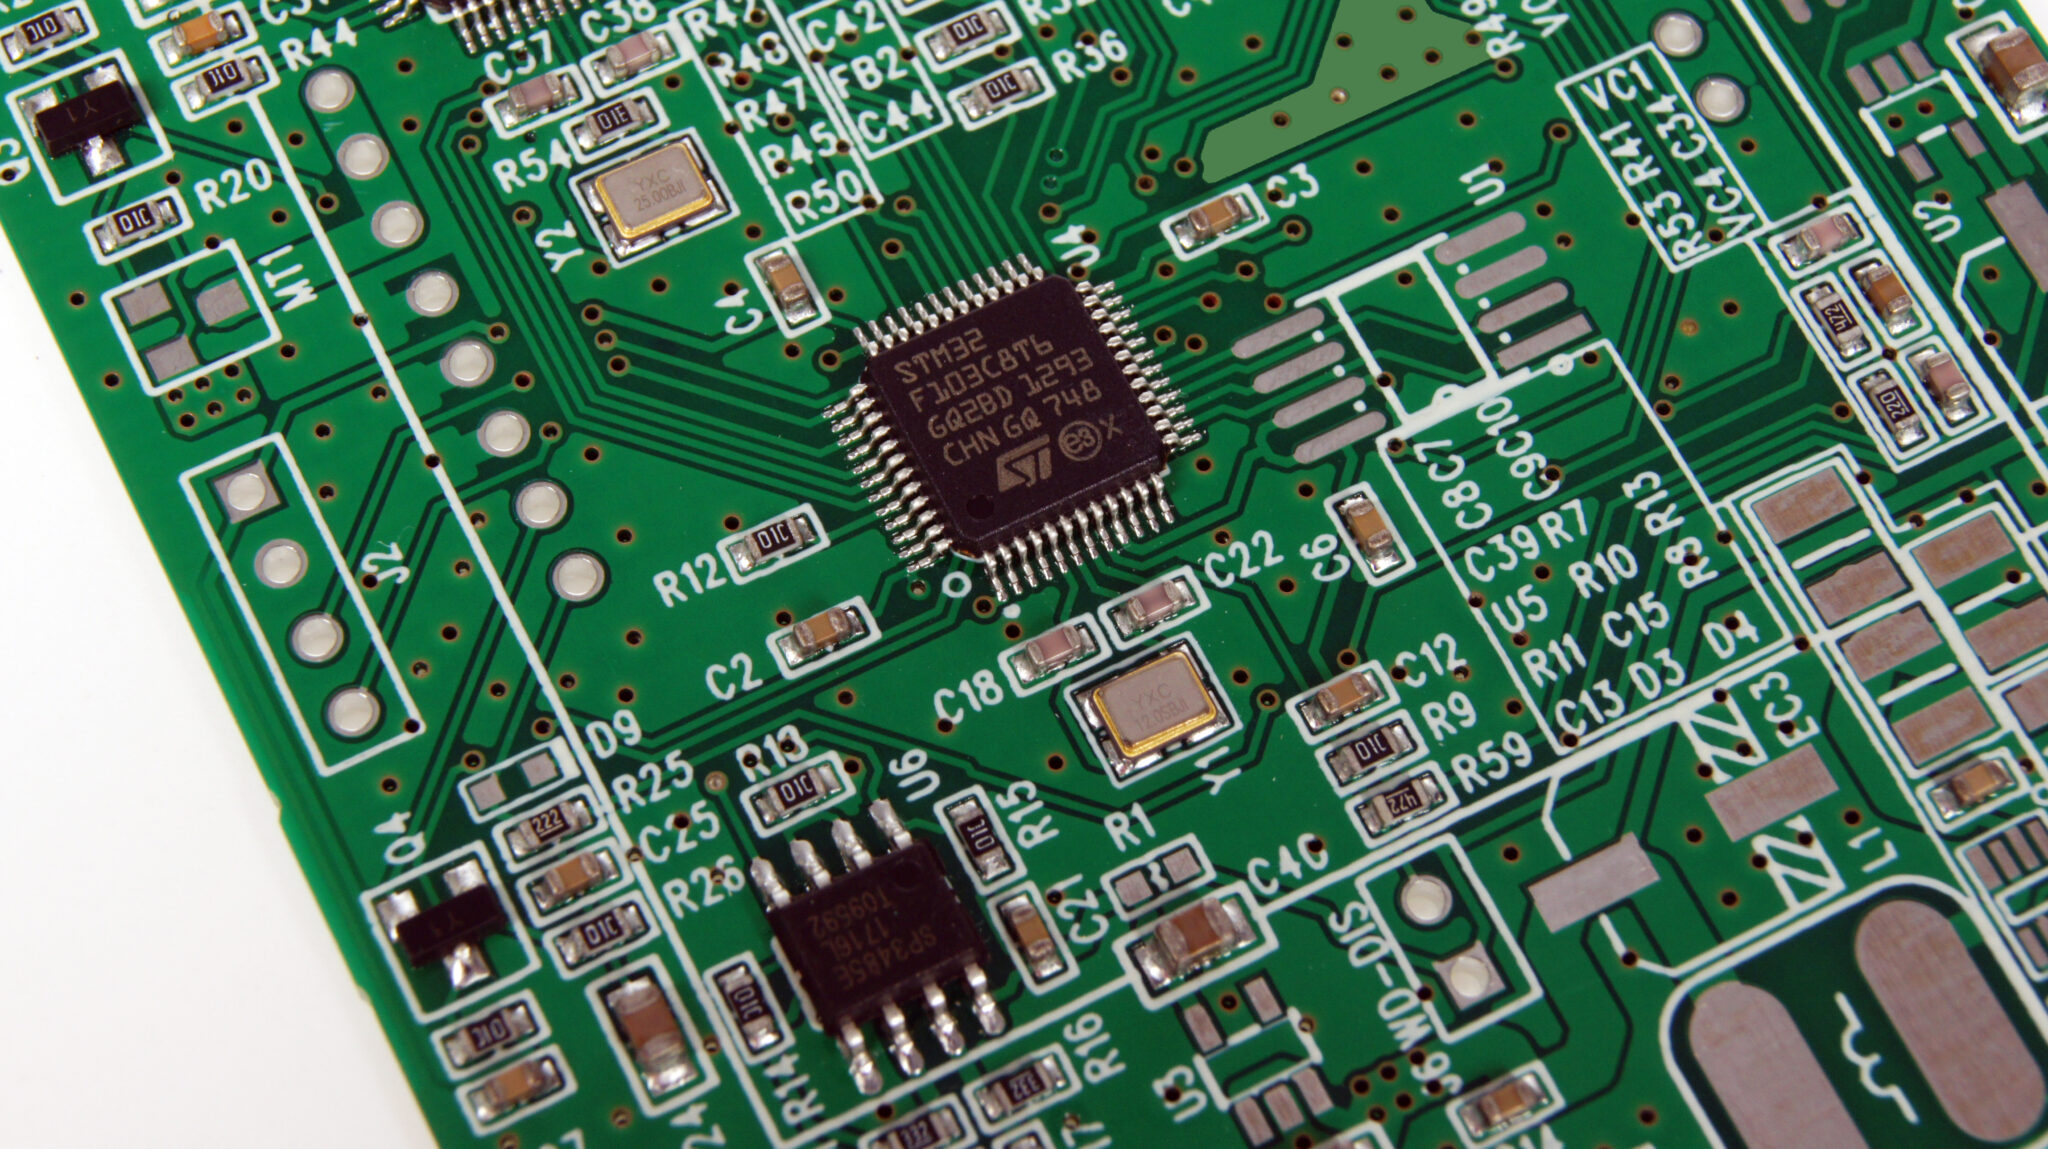  PCB circuit board assembly process